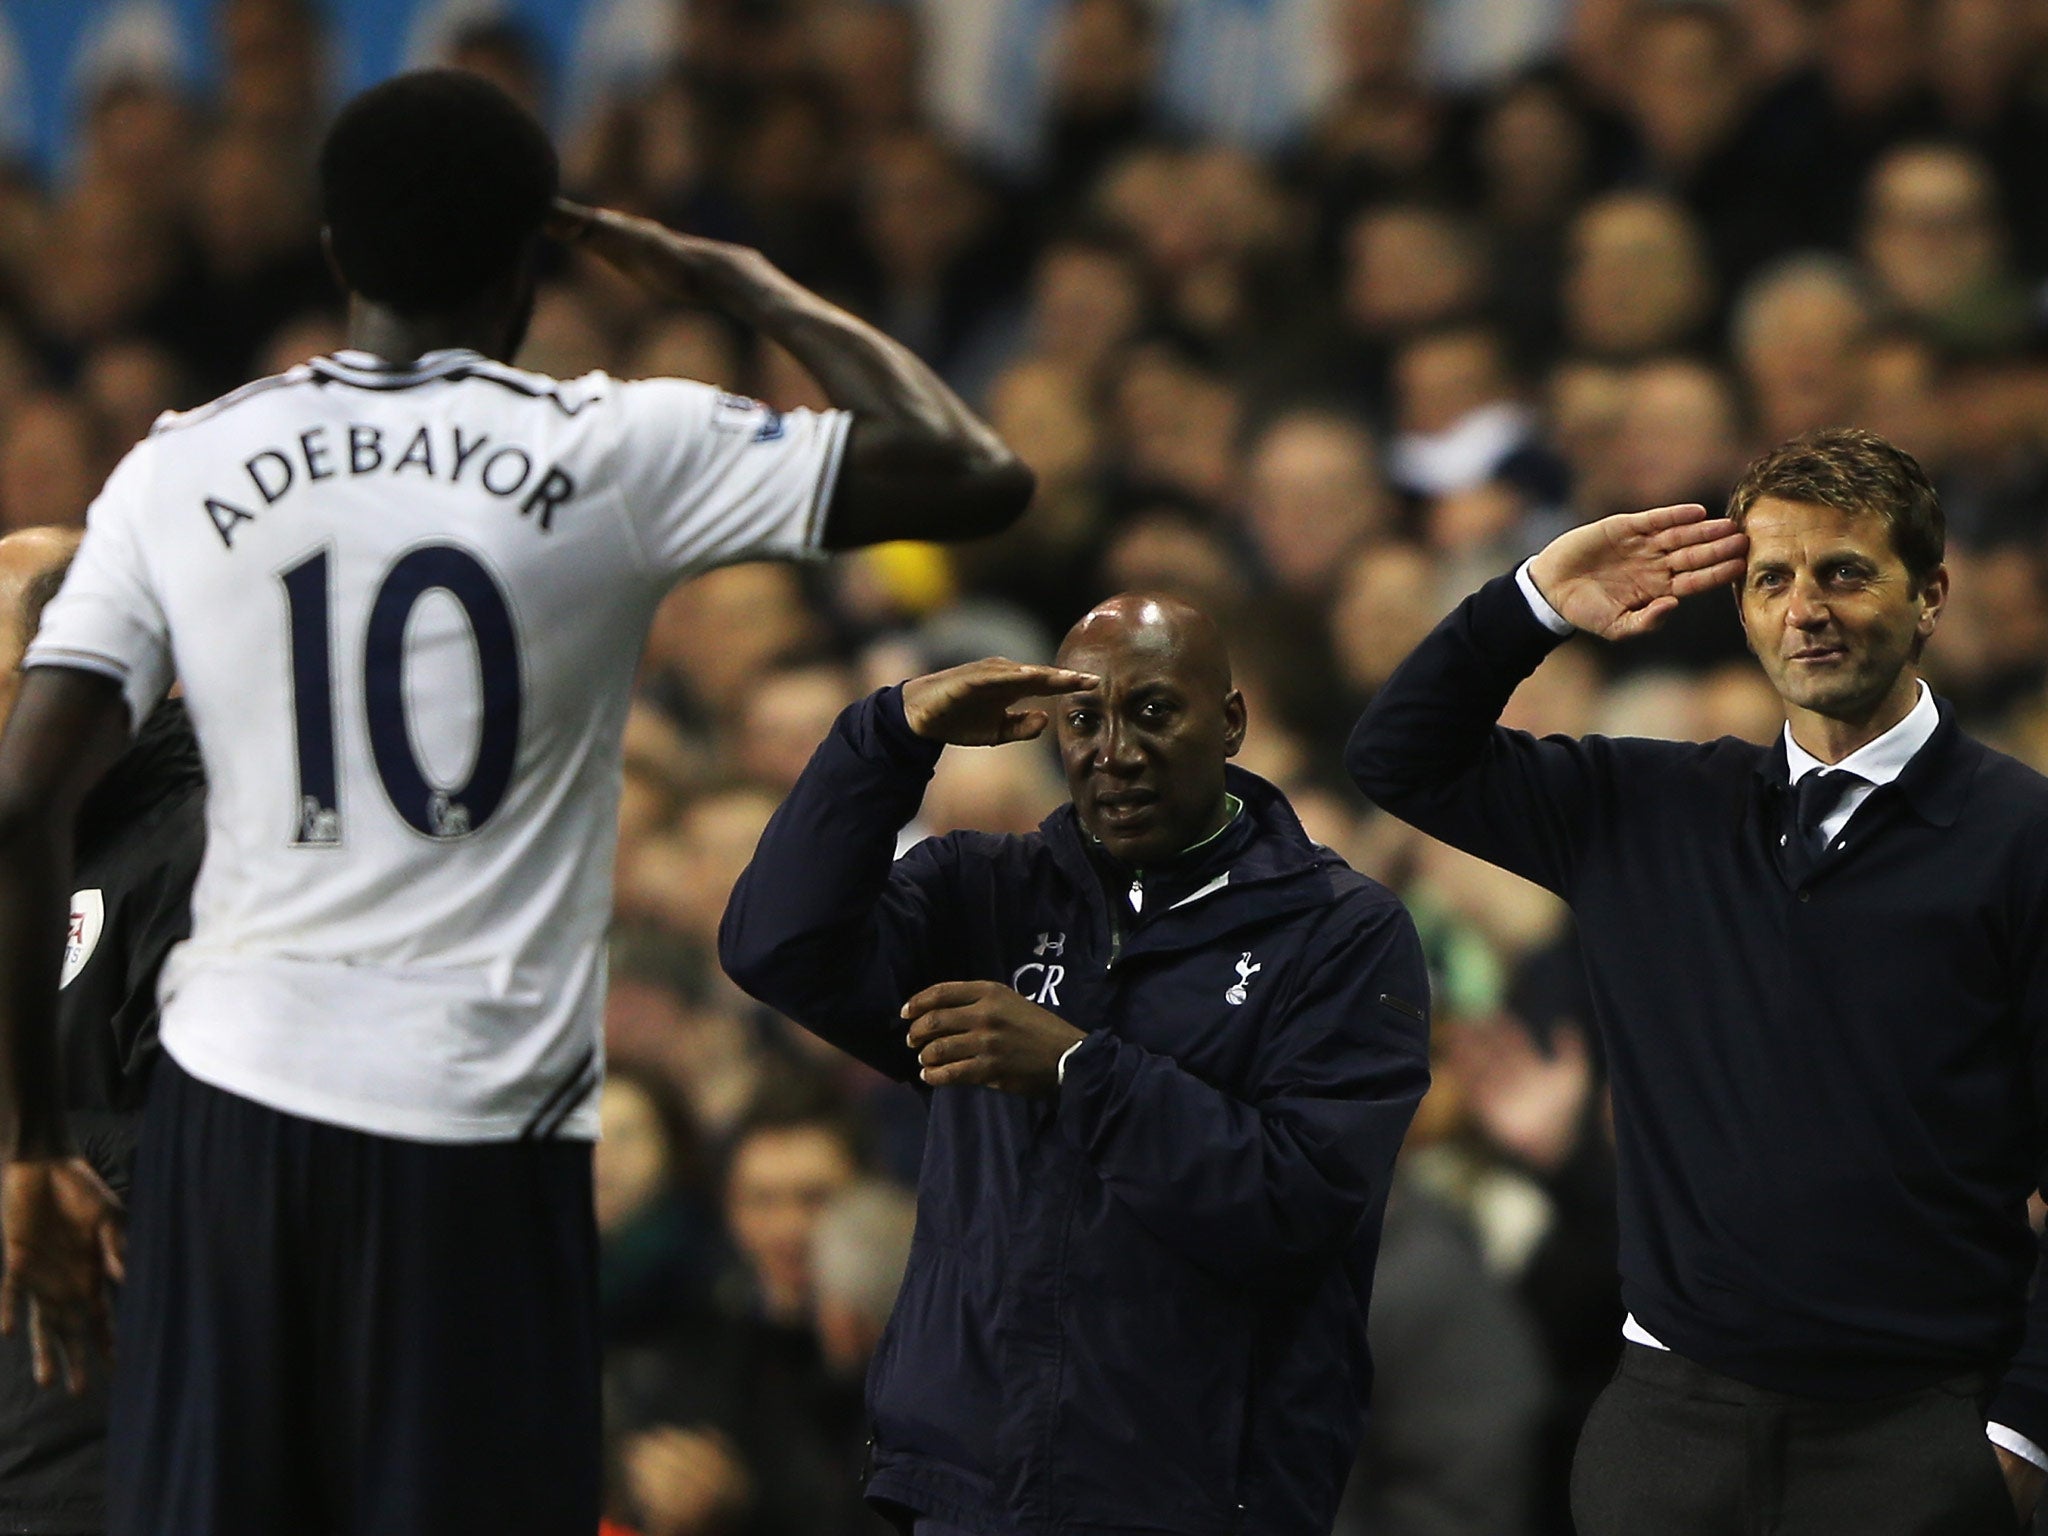 Emmanuel Adebayor of Tottenham Hotspur celebrates scoring his second goal against Sunderland by saluting manager Tim Sherwood